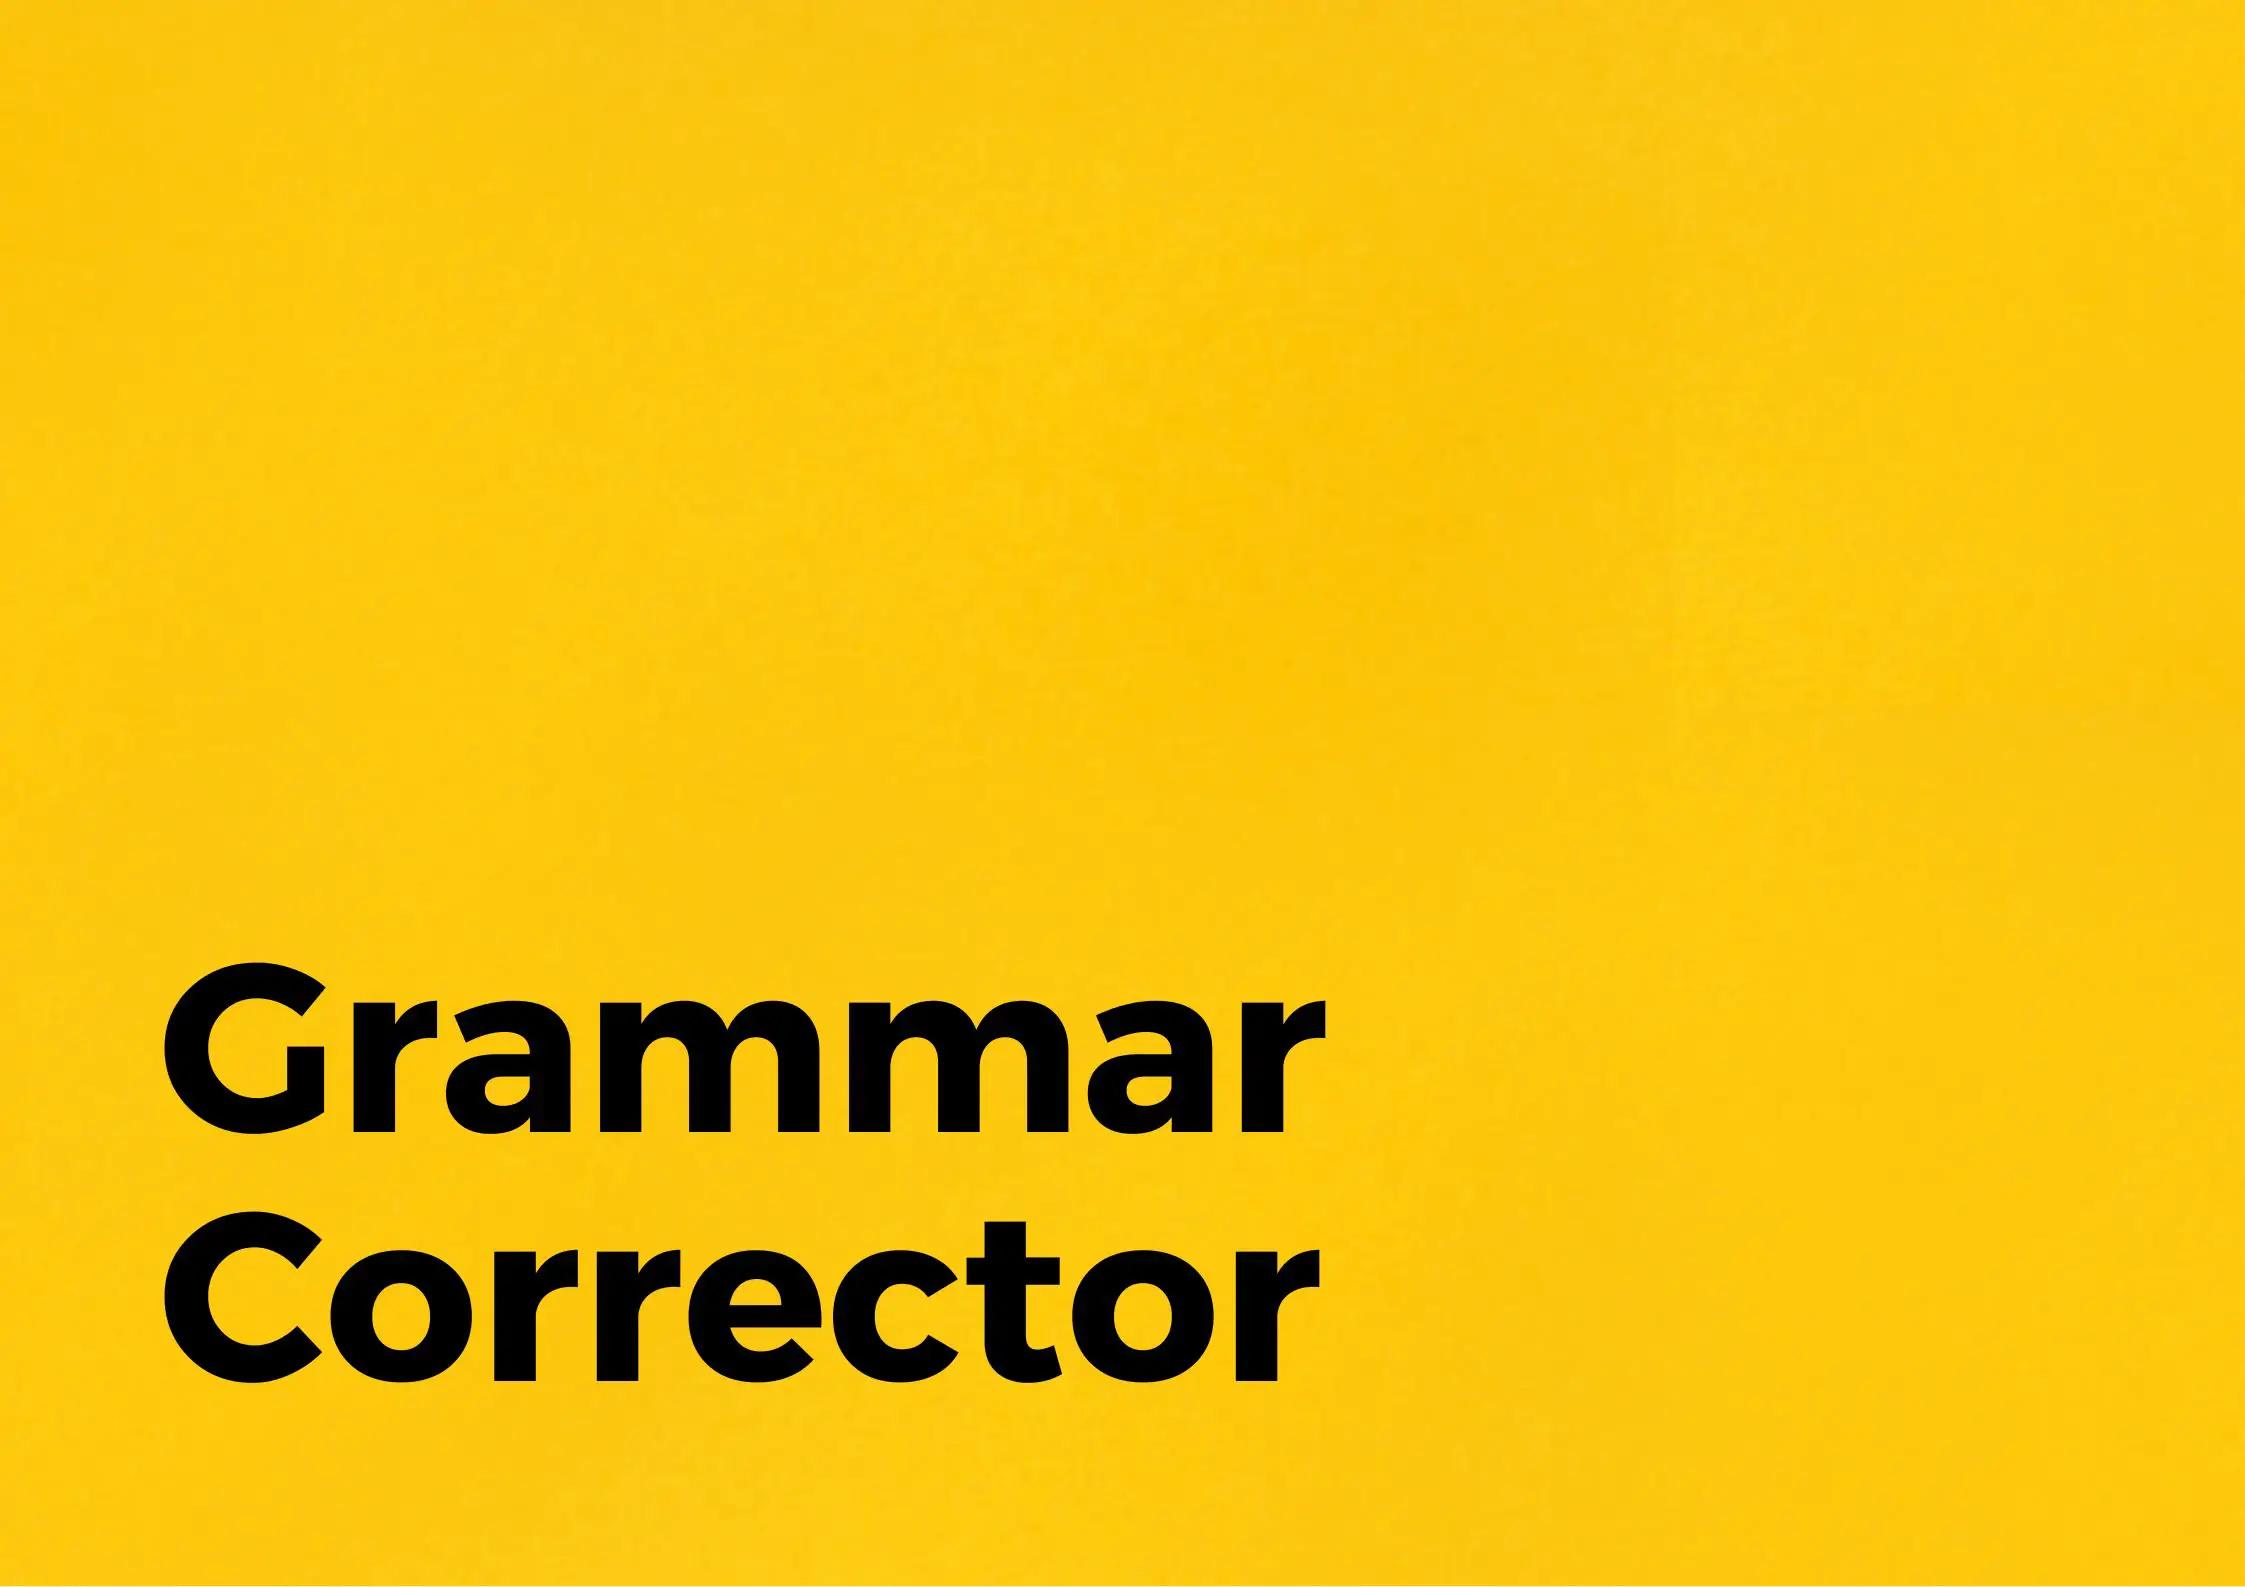 grammar corrector uk